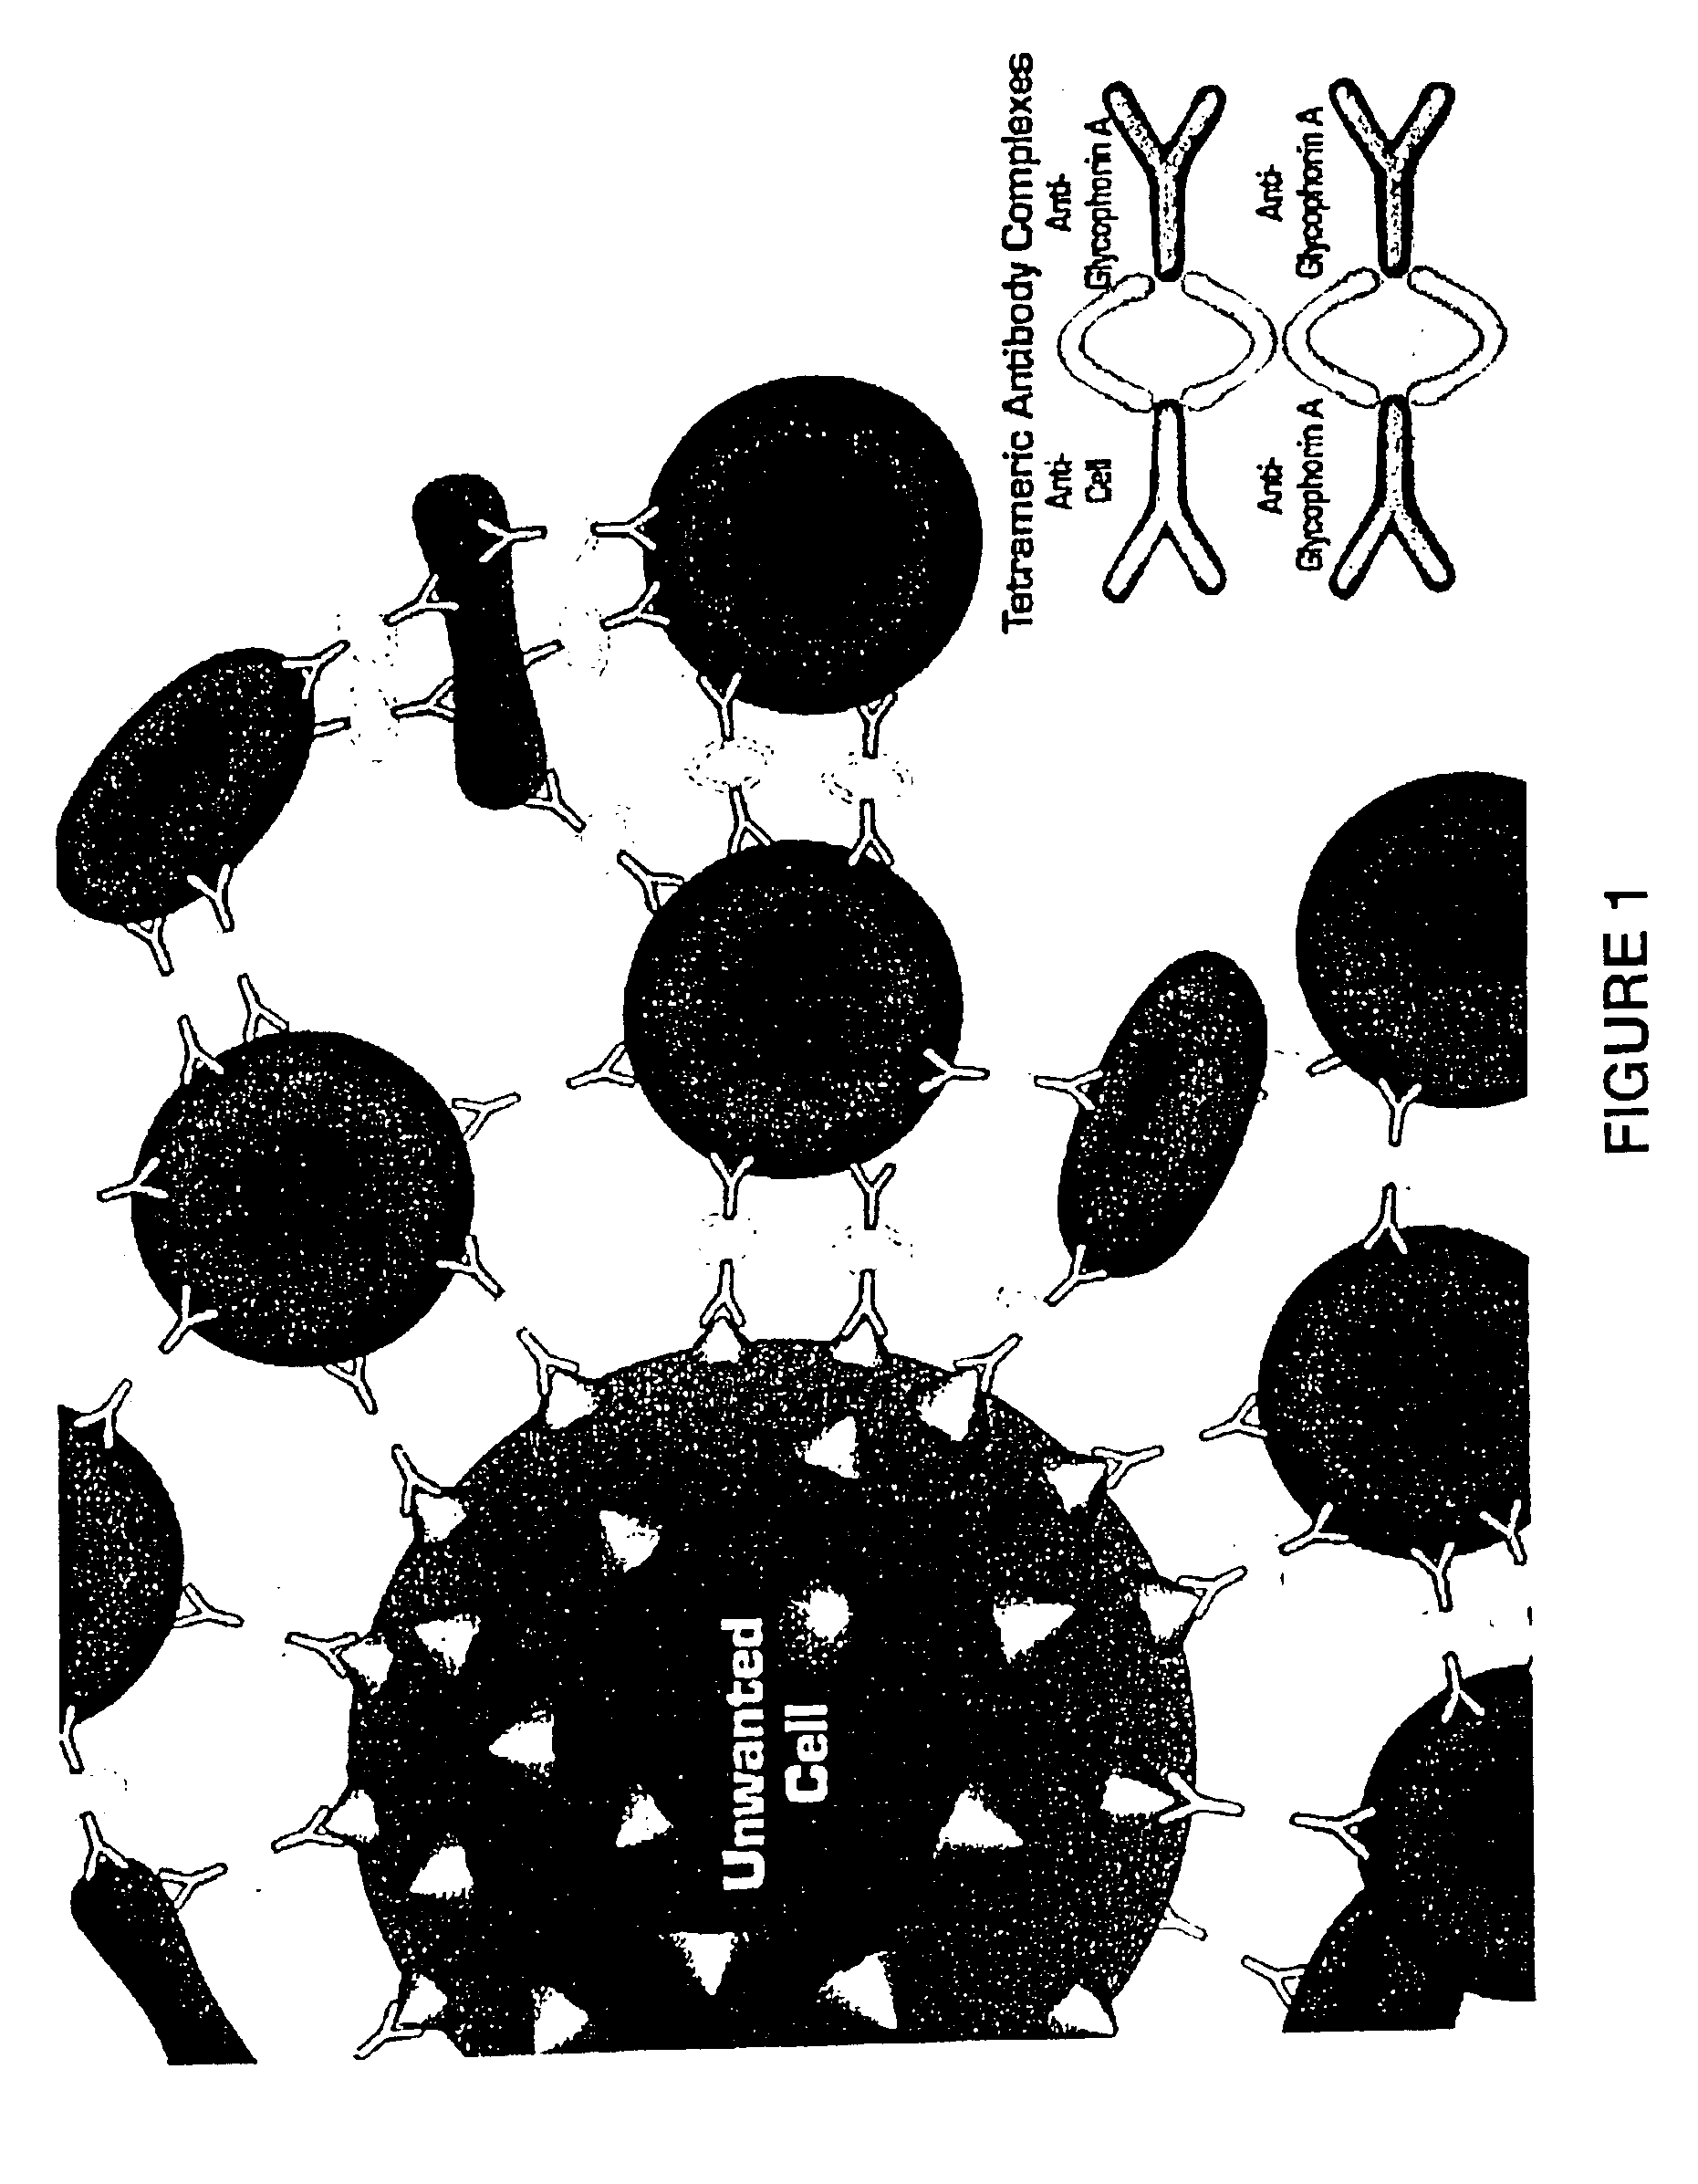 Method for separating cells using immunorosettes